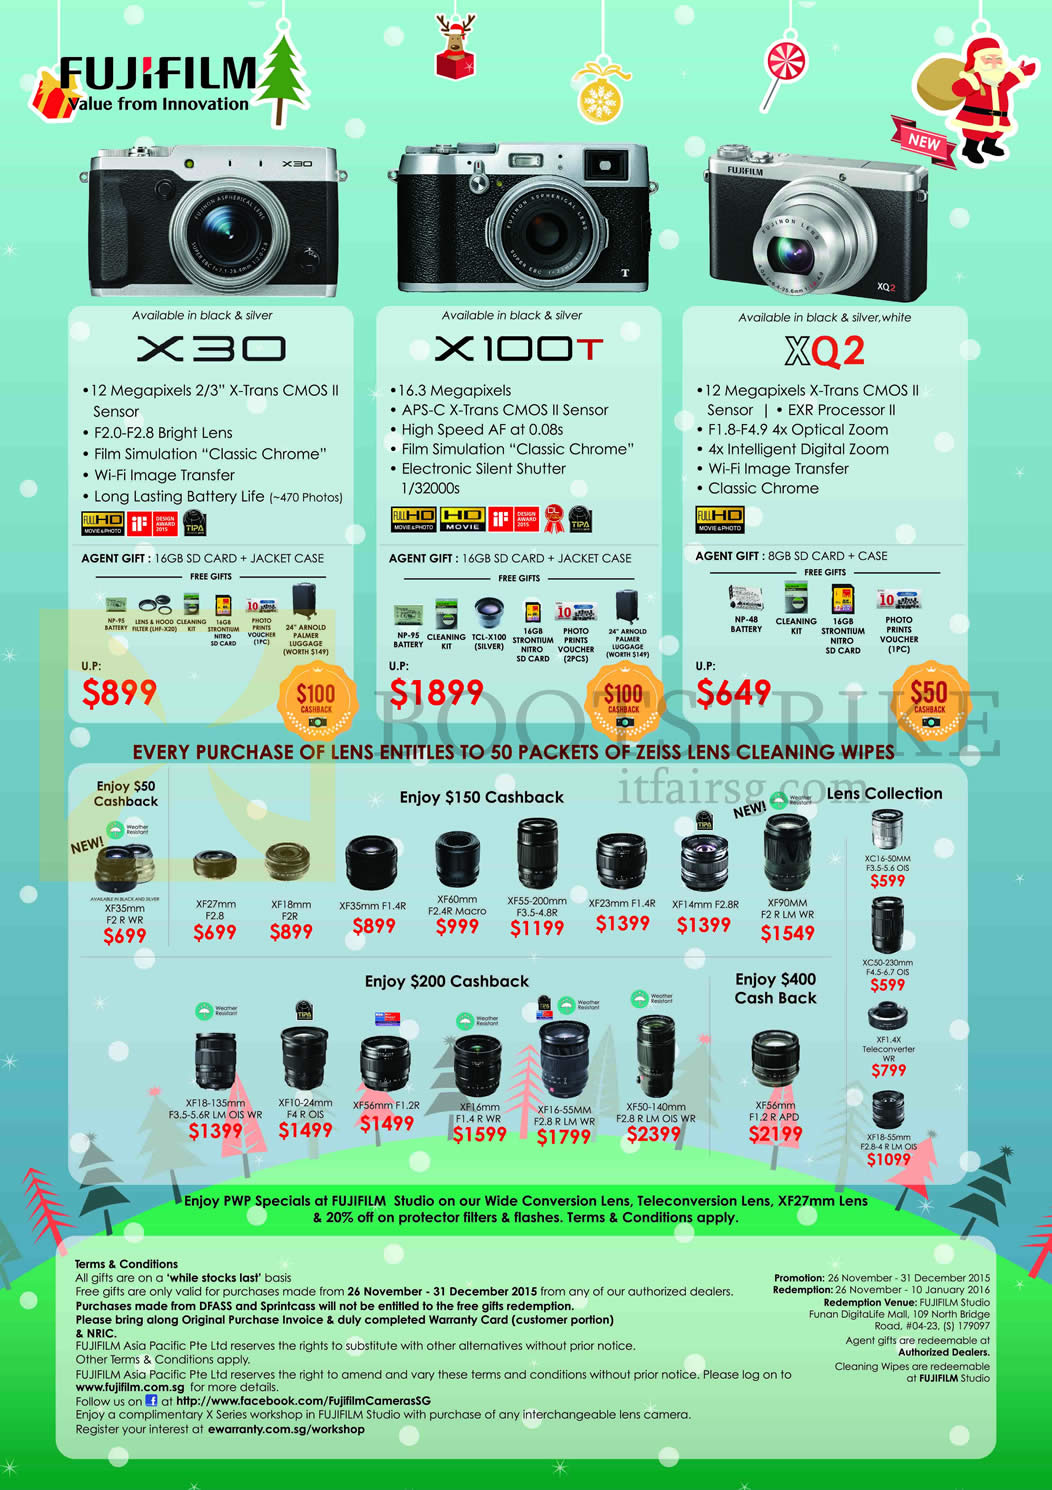 SITEX 2015 price list image brochure of Fujifilm Digital Cameras X30, X100T, XQ2, Lenses, Lense Cleaning Wipes